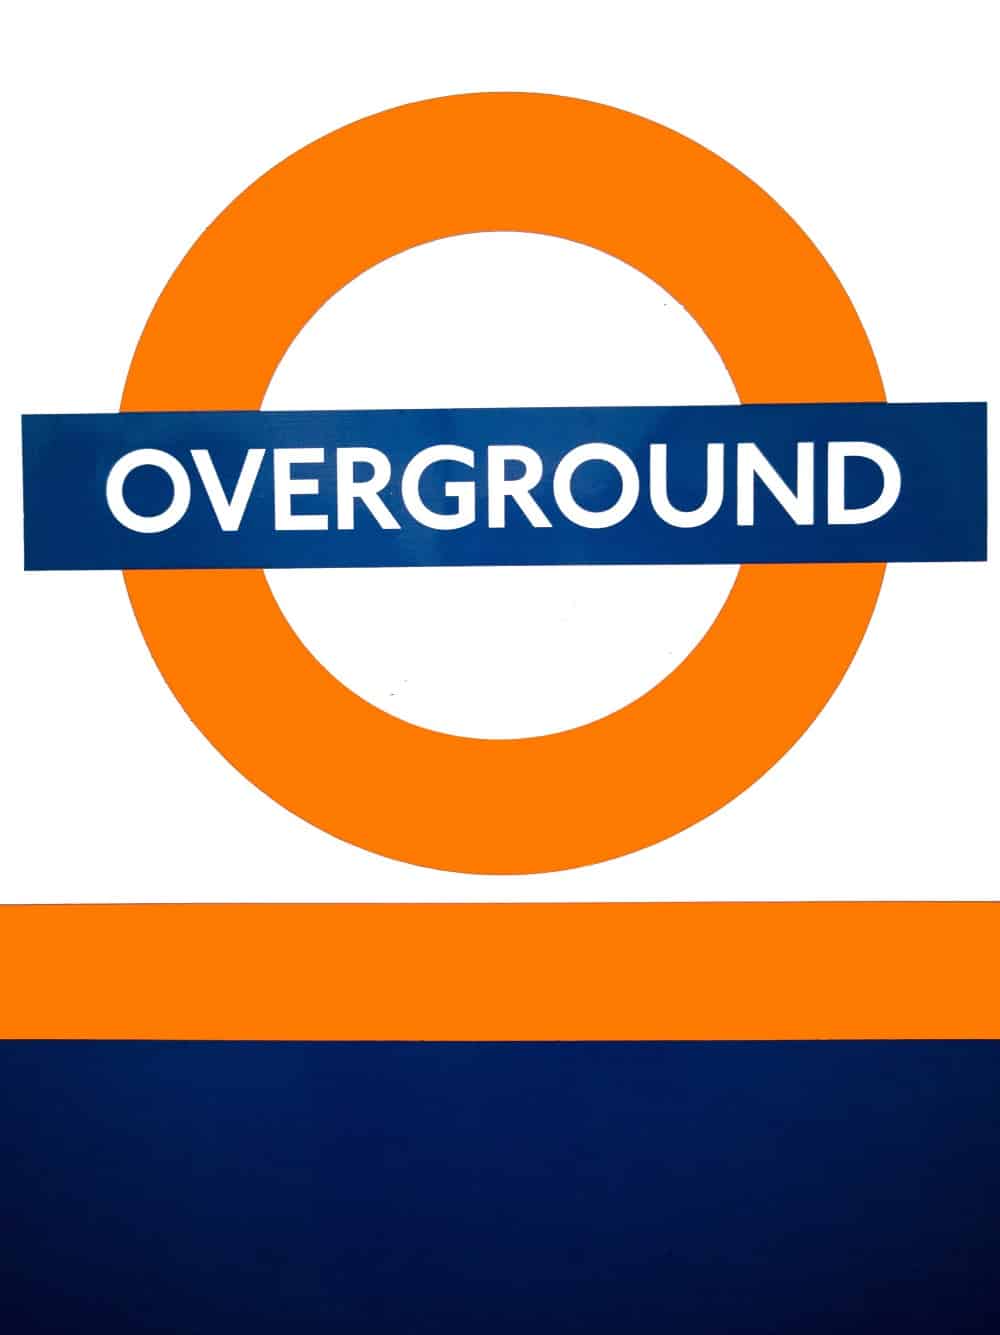 London Overground sign